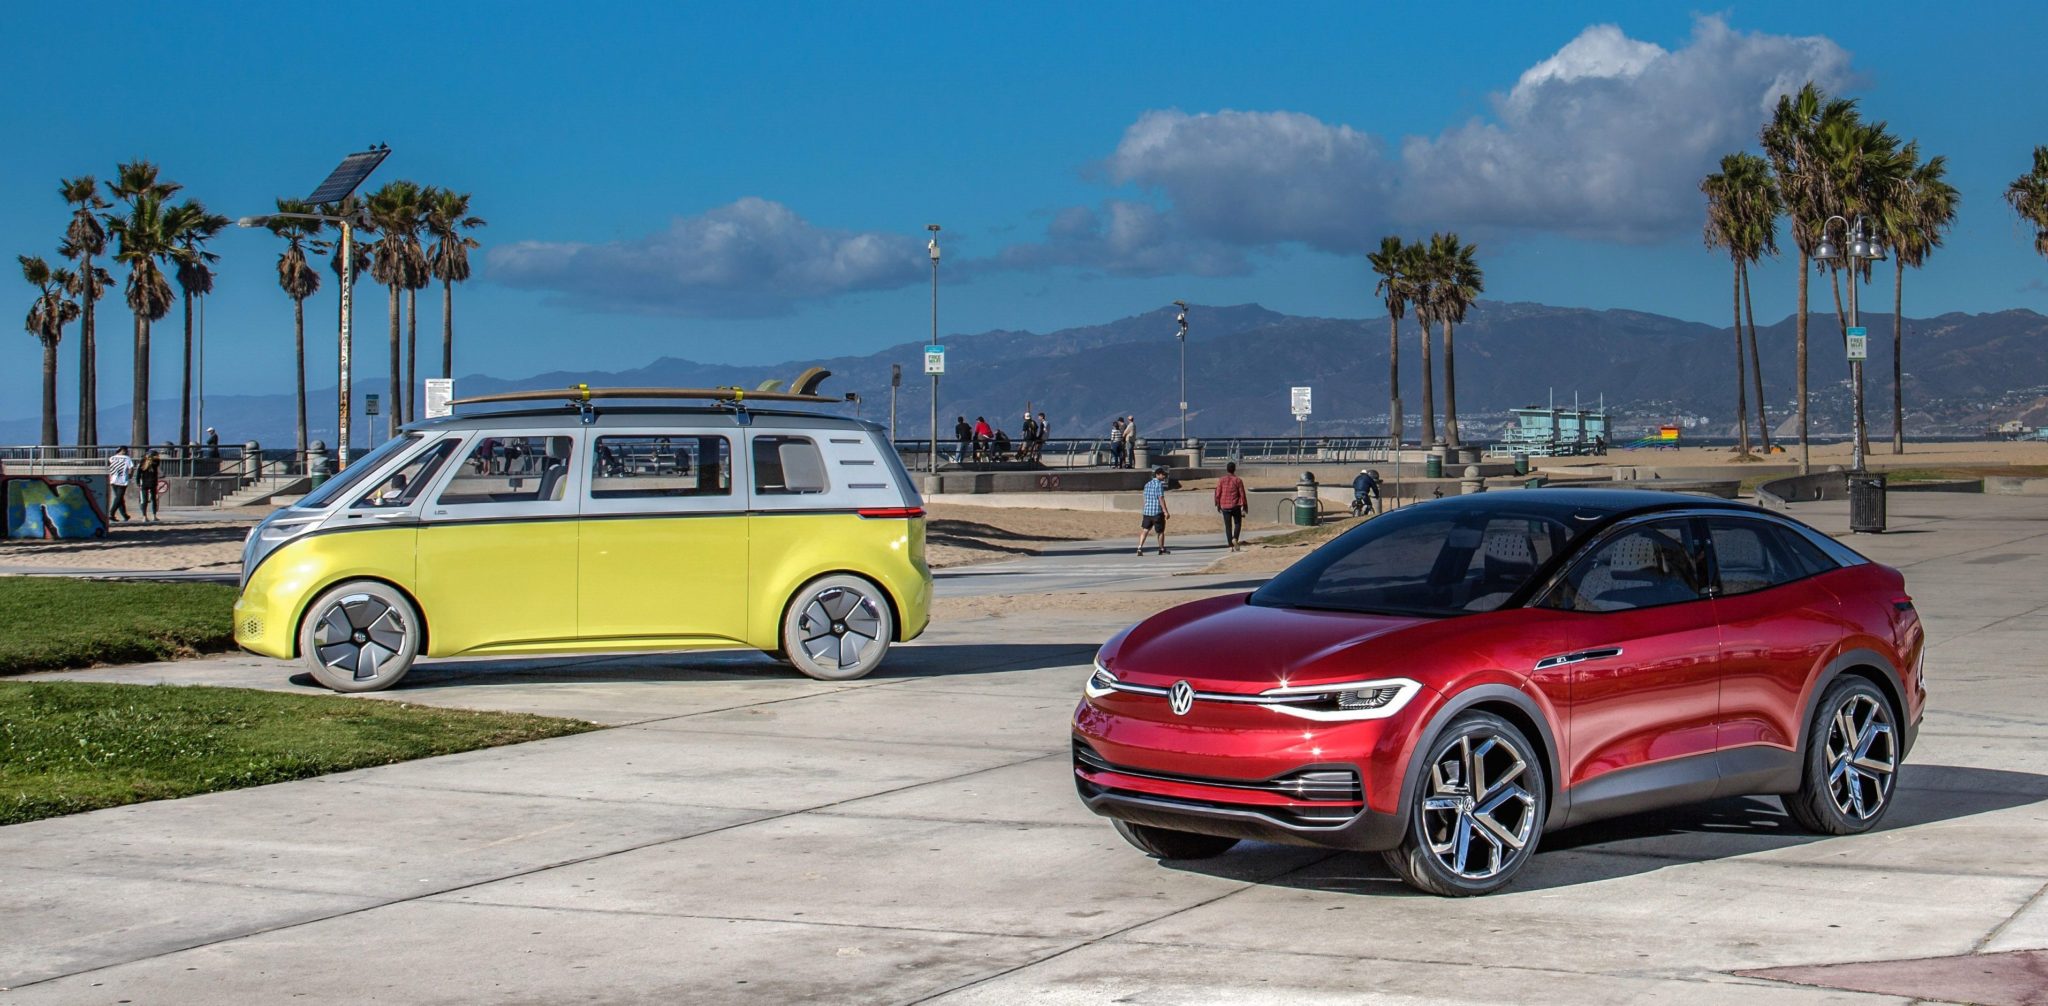 Volkswagen Presents its 20202025 Roadmap The Next Avenue